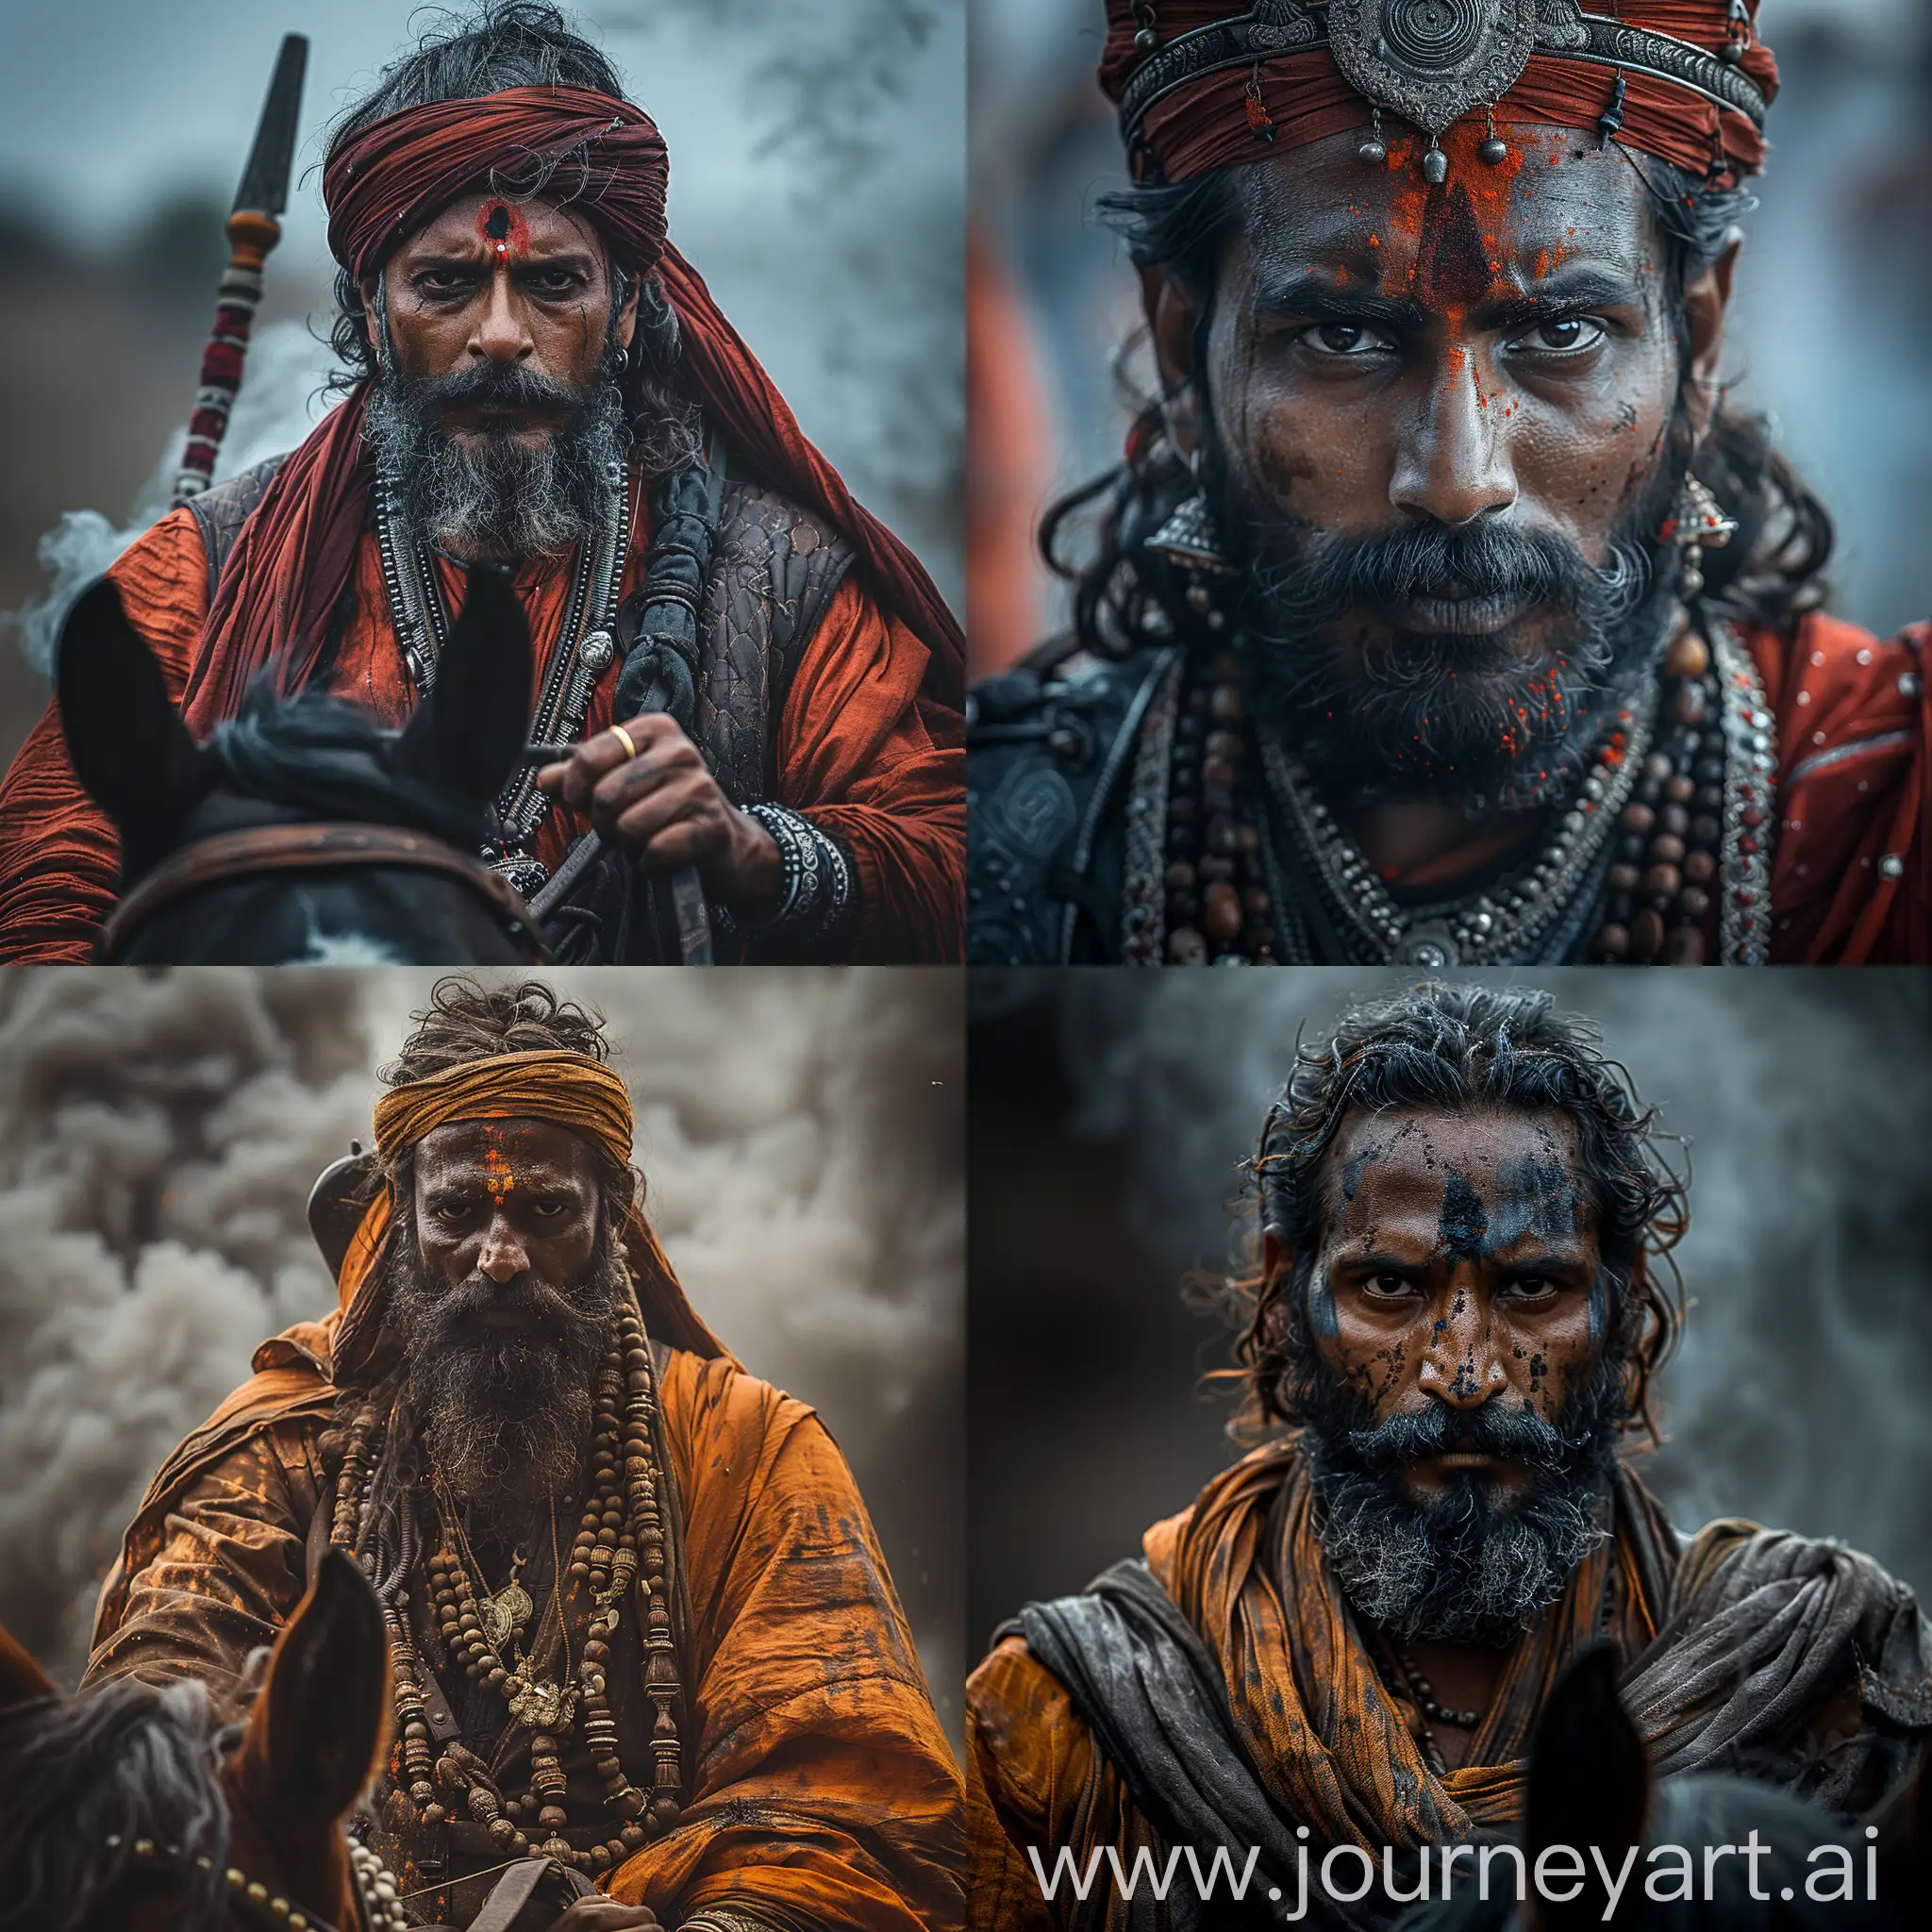 Warrior-Chatrapati-Shivaji-Maharaj-Riding-Horse-in-Cinematic-Fantasy-Film-Style